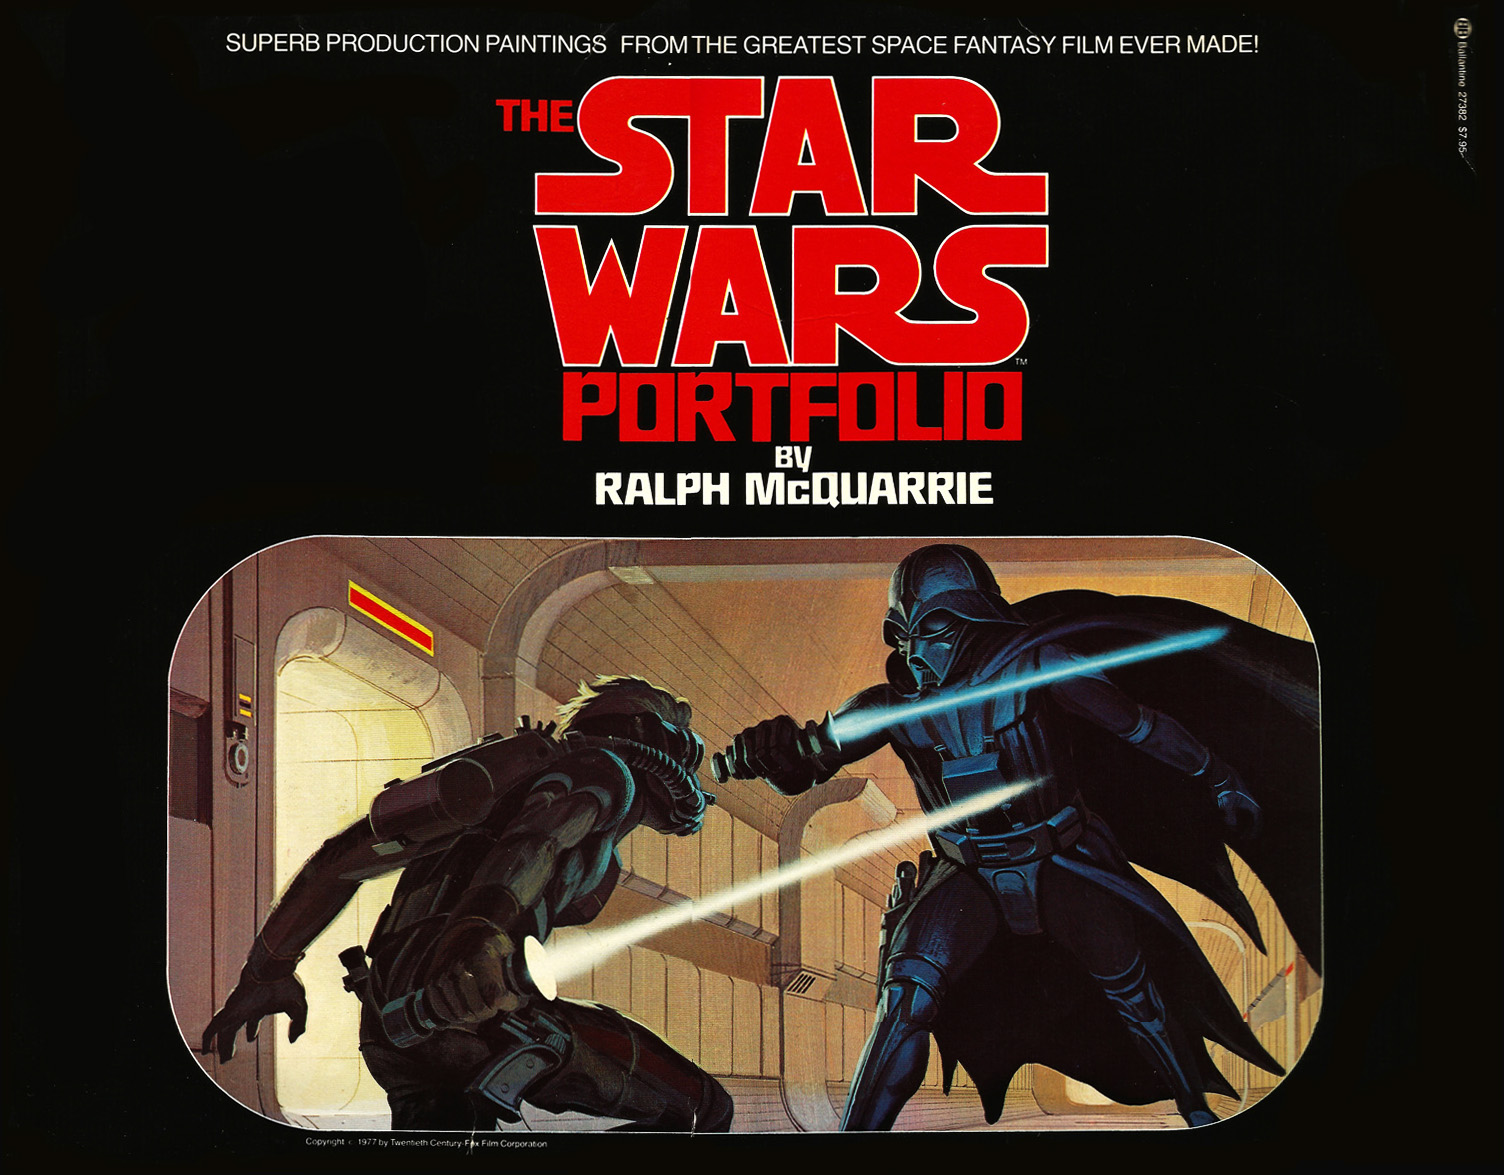 Plik:Star-wars-portfolio-front-cover.jpg